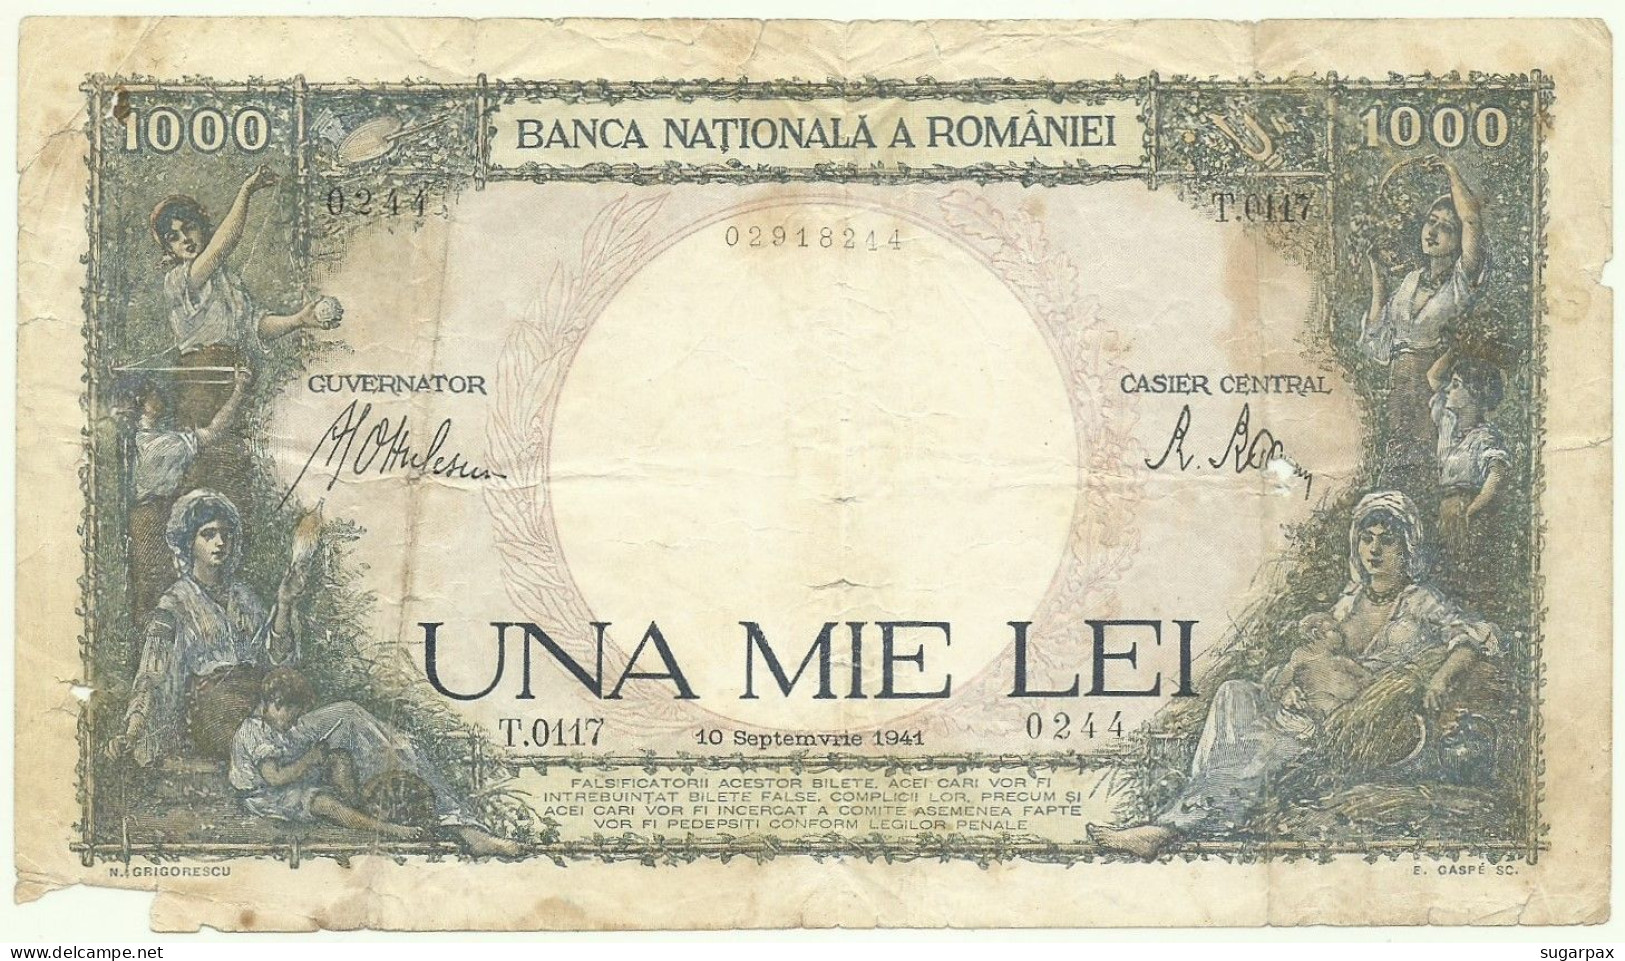 ROMANIA - 1000 Lei - 10.9.1941 - Pick: 52 - ( 182 X 104 ) Mm - Série T.0117 - 1.000 - Romania